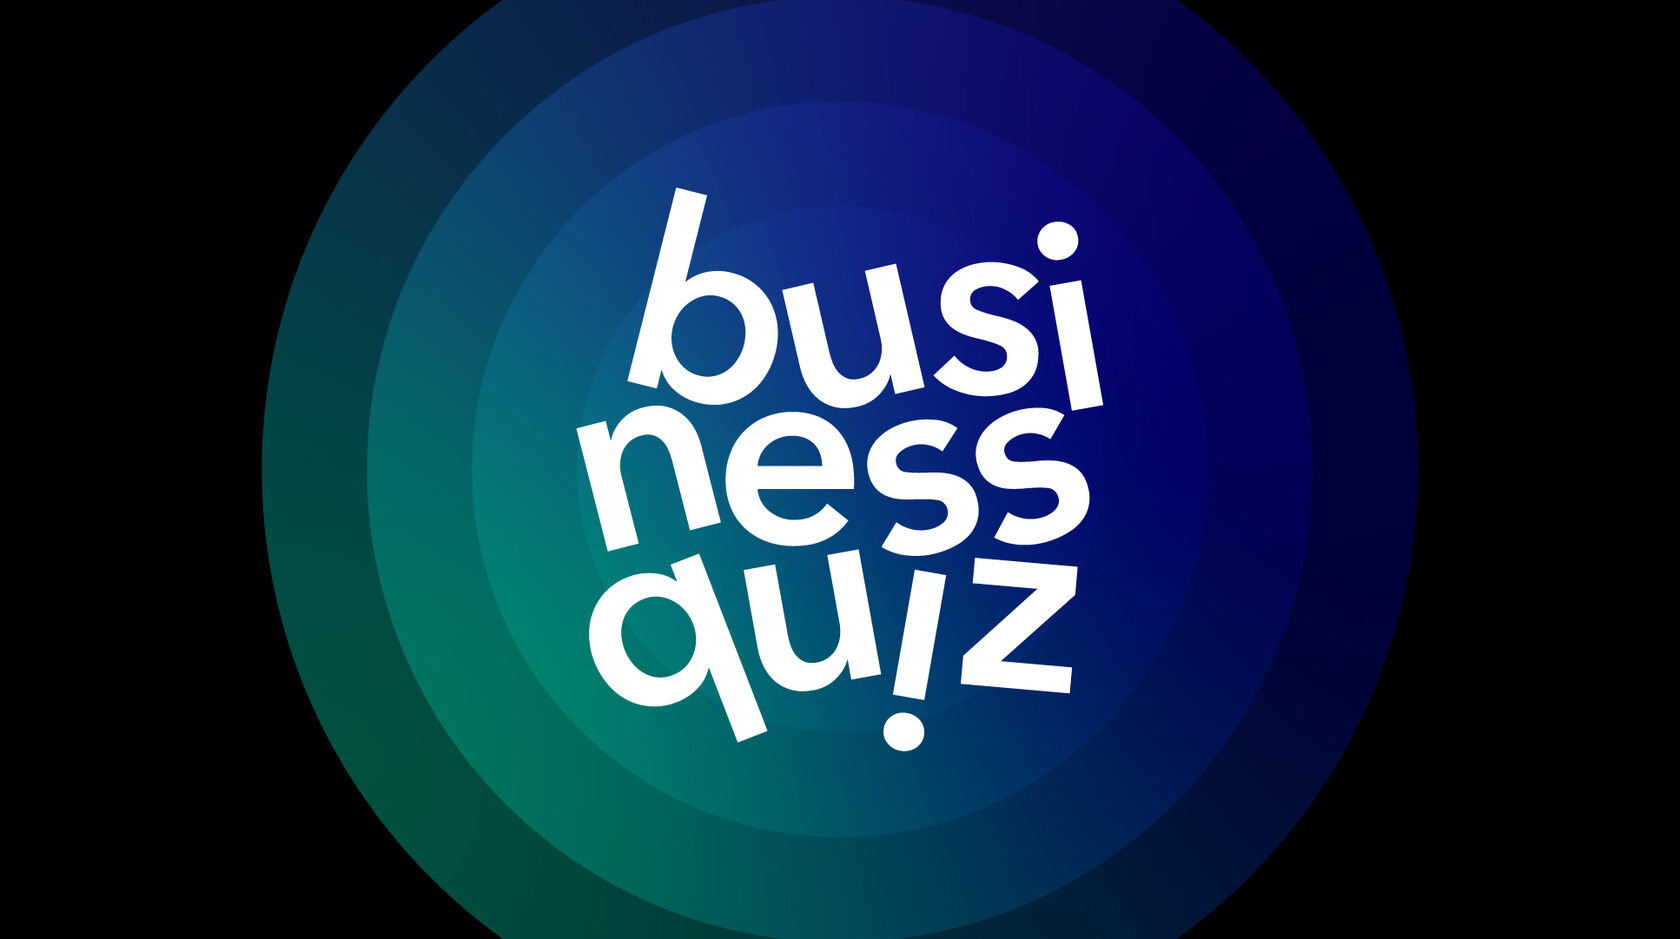 Бизнес квиз. Business Quiz. Quizz Business. Images for Quizz Business background.